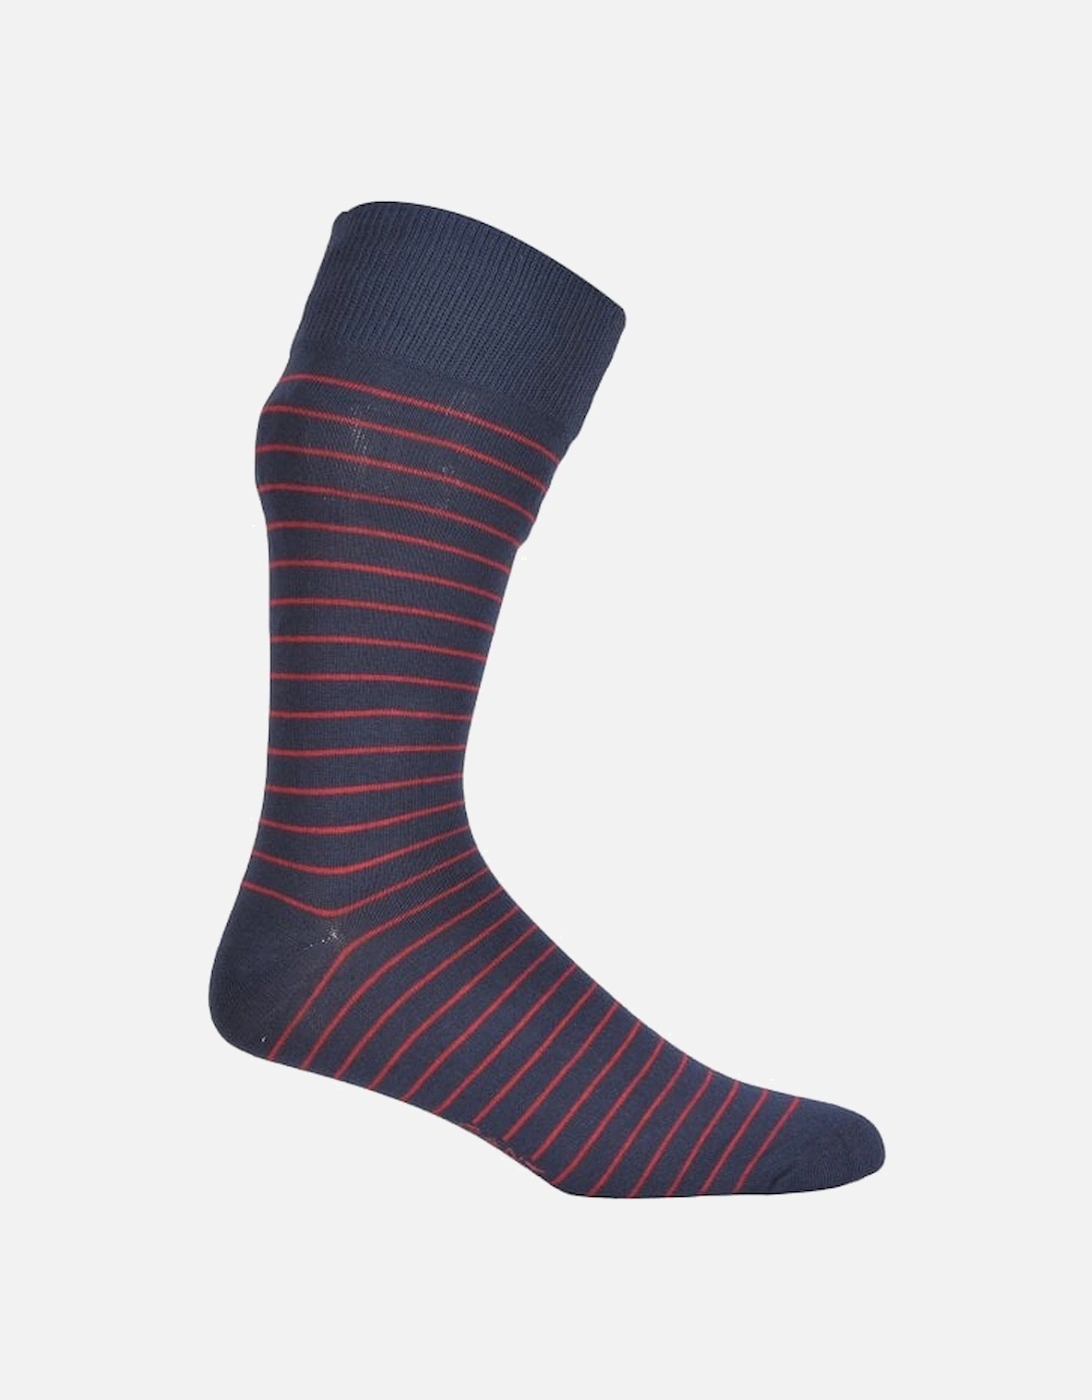 3-Pack Stripe & Solid Socks Gift Set, Navy/red